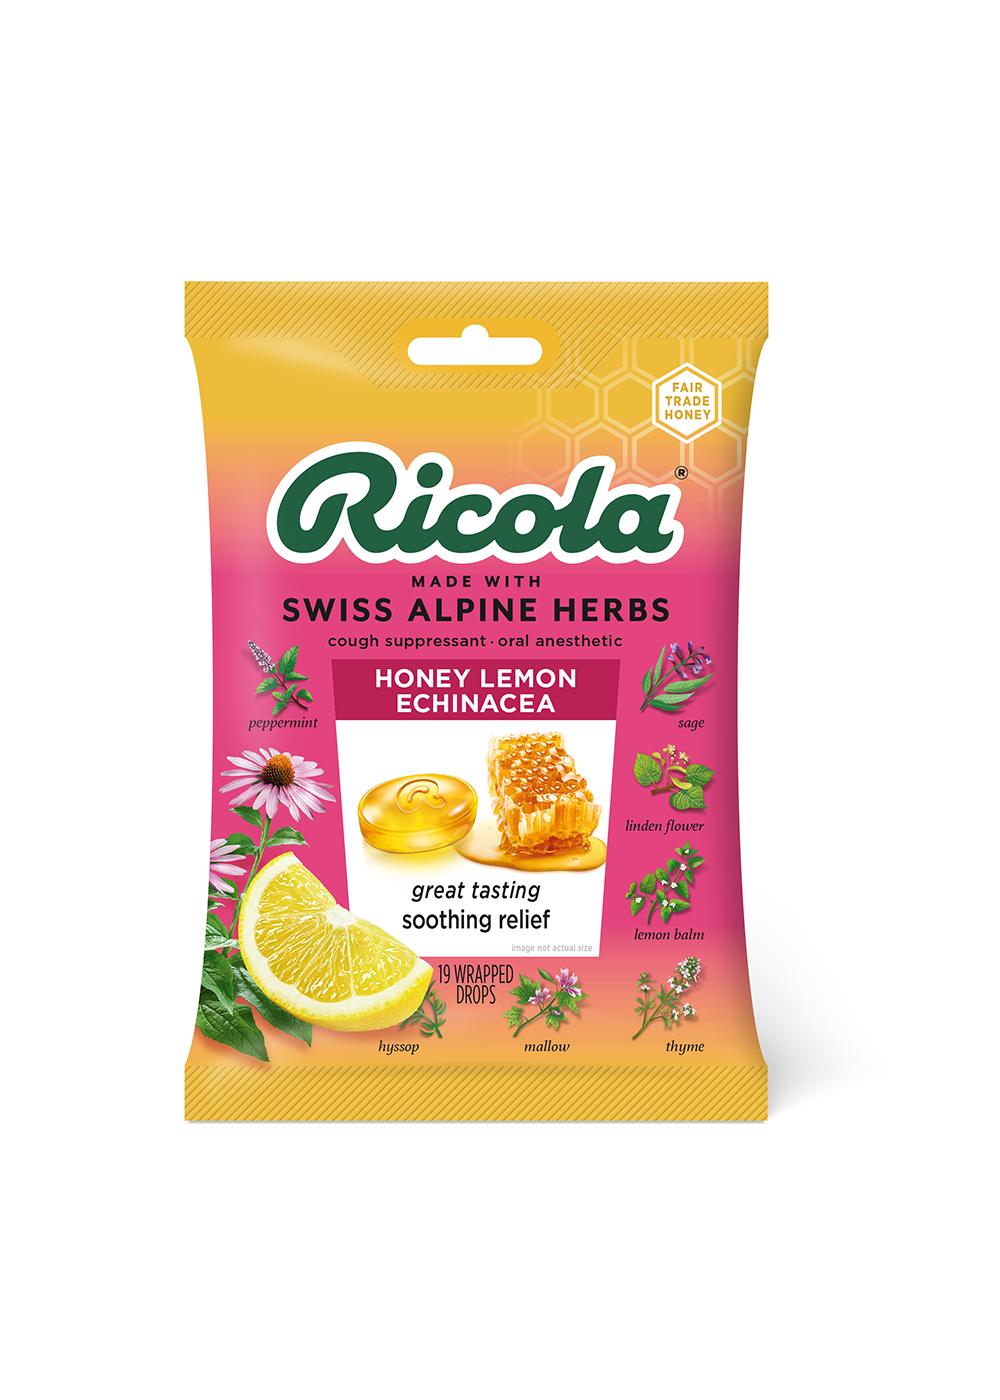 Ricola Cough Drops - Honey Lemon Echinacea; image 1 of 2